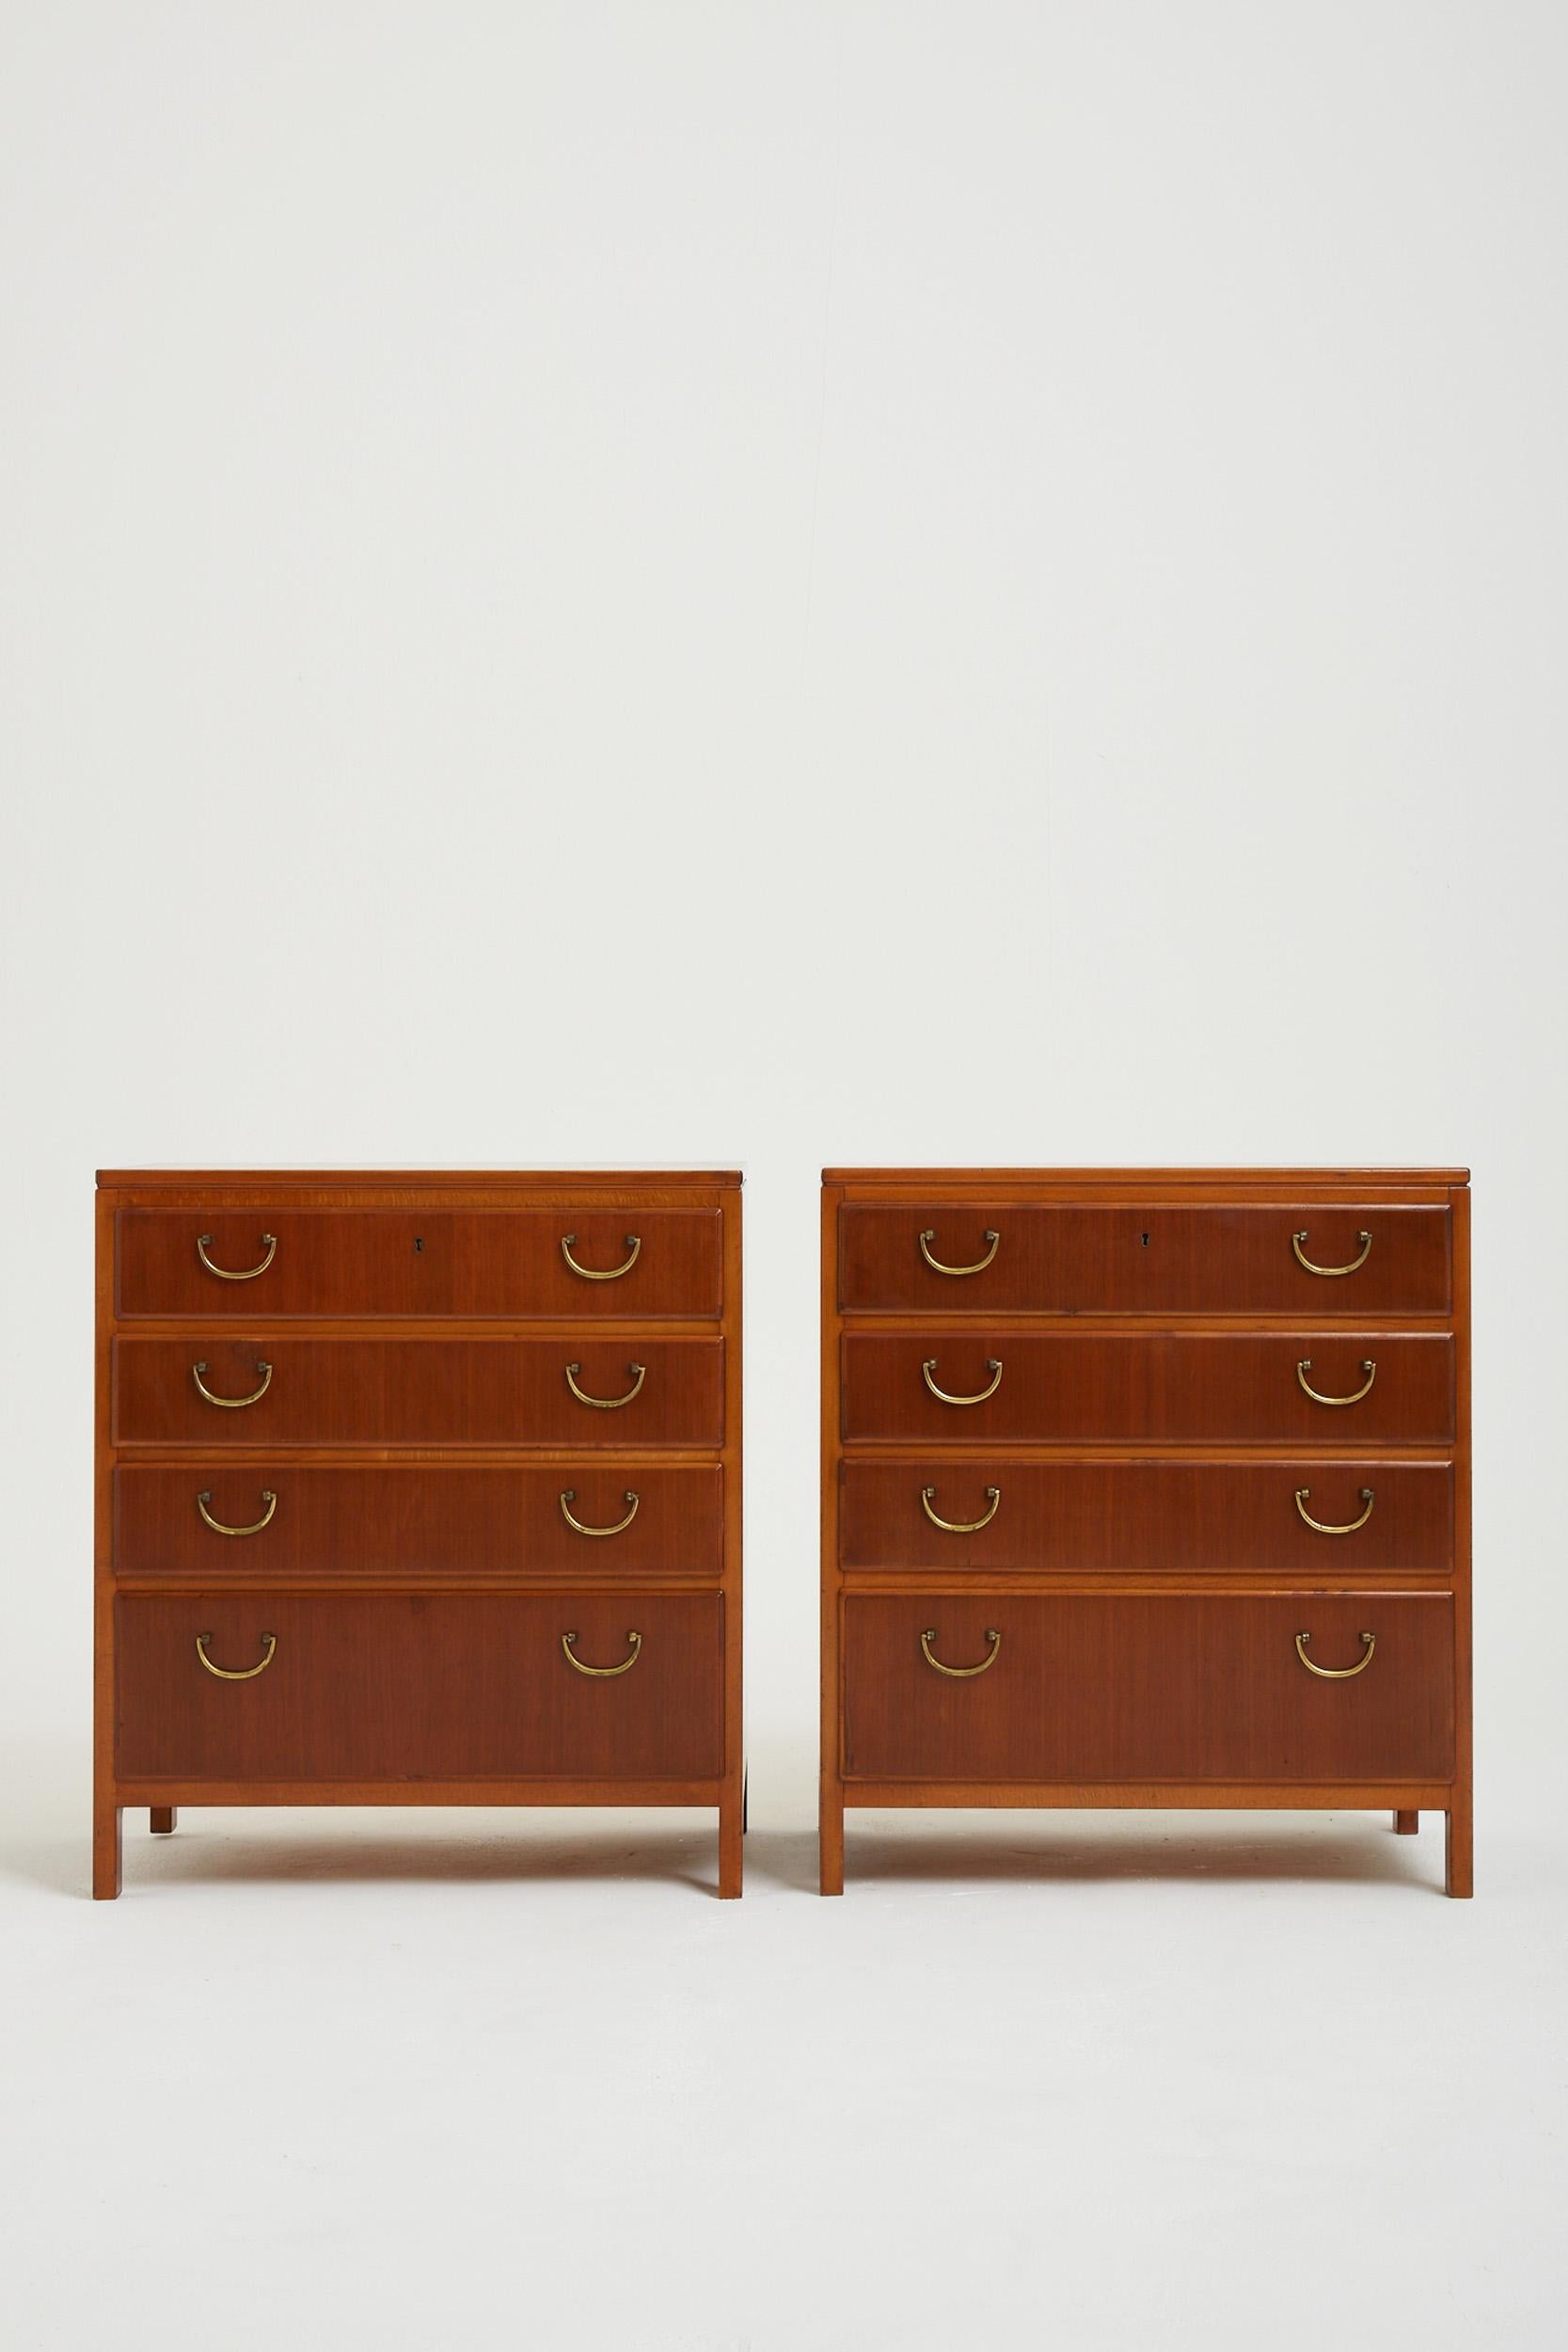 A pair of bedside chests of drawers David Rosen for Nordiska Kompaniet.
Dated 1957, Sweden.
 